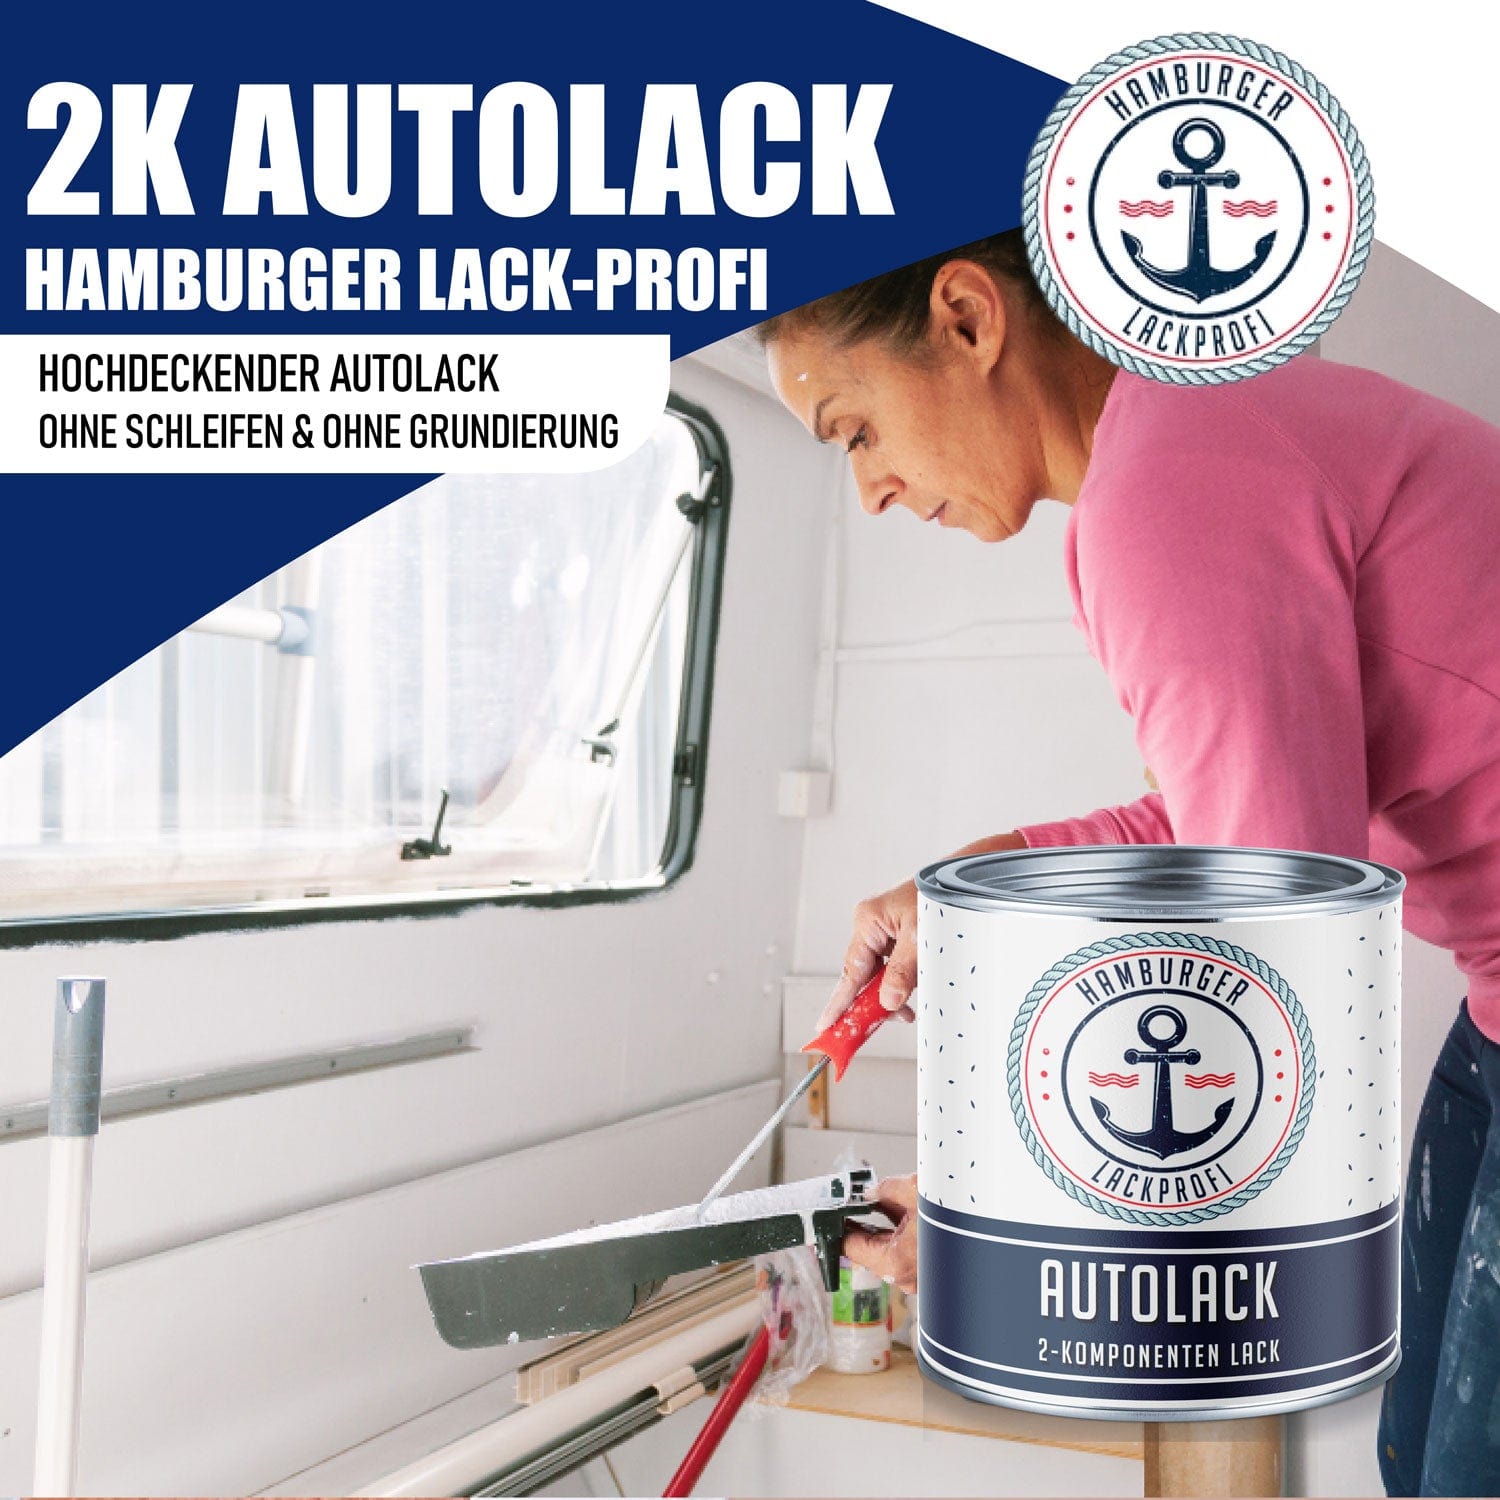 Hamburger Lack-Profi Lacke & Beschichtungen Hamburger Lack-Profi 2K Autolack in Granitgrau RAL 7026 mit Lackierset (X300) & Verdünnung (1 L) - 30% Sparangebot